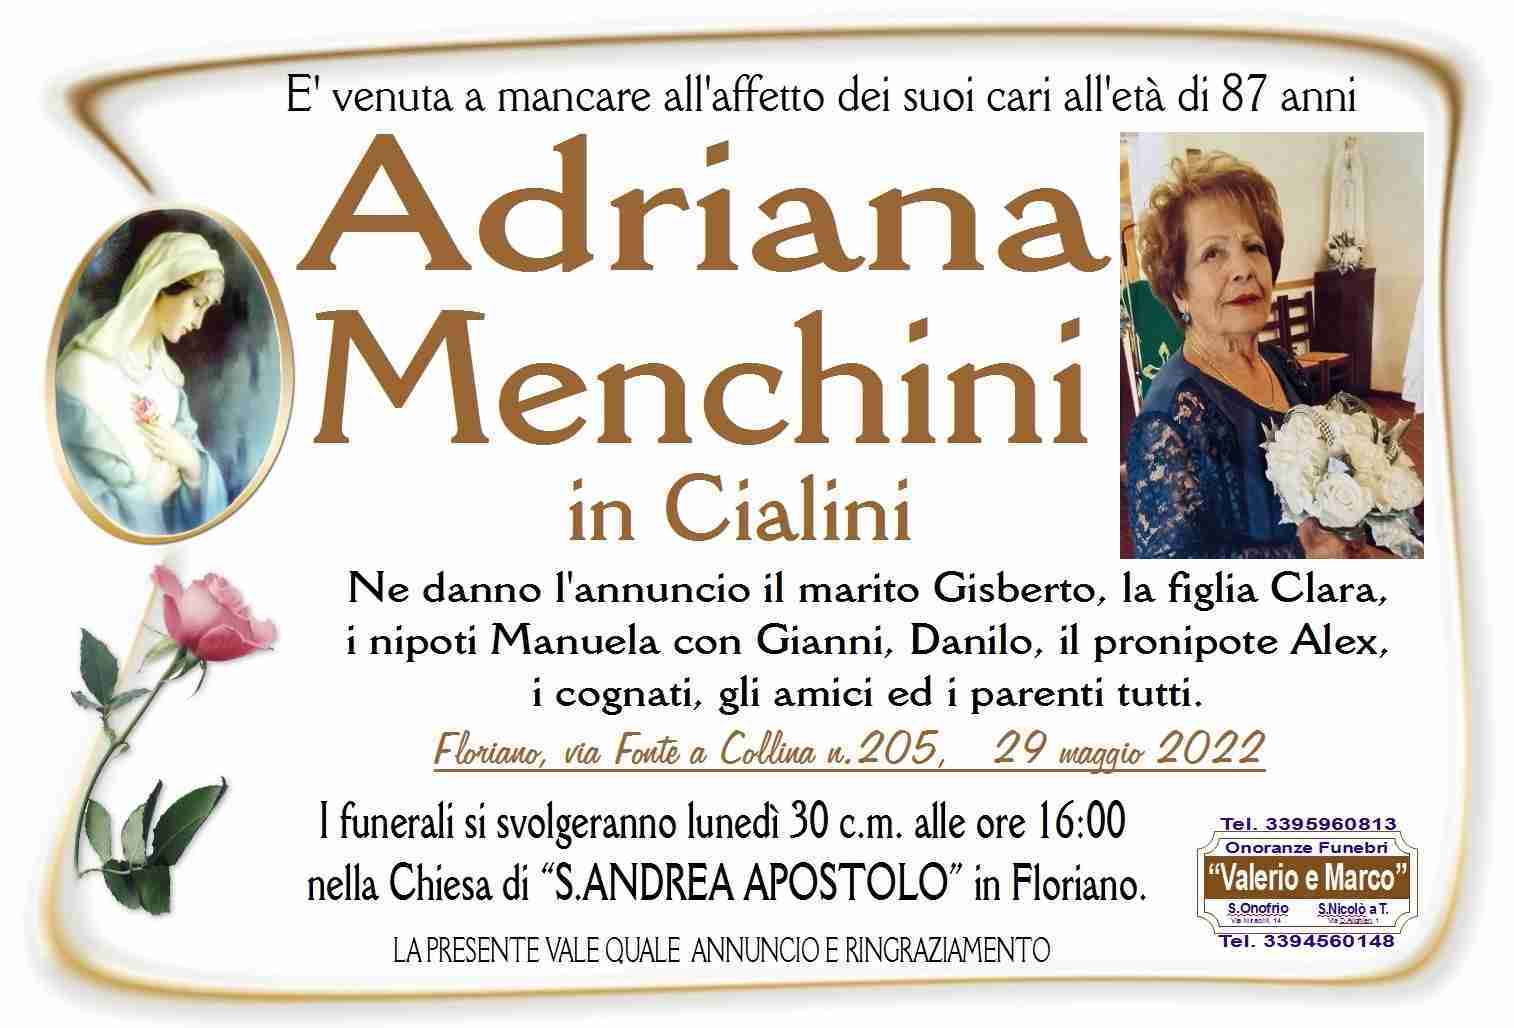 Adriana Menchini